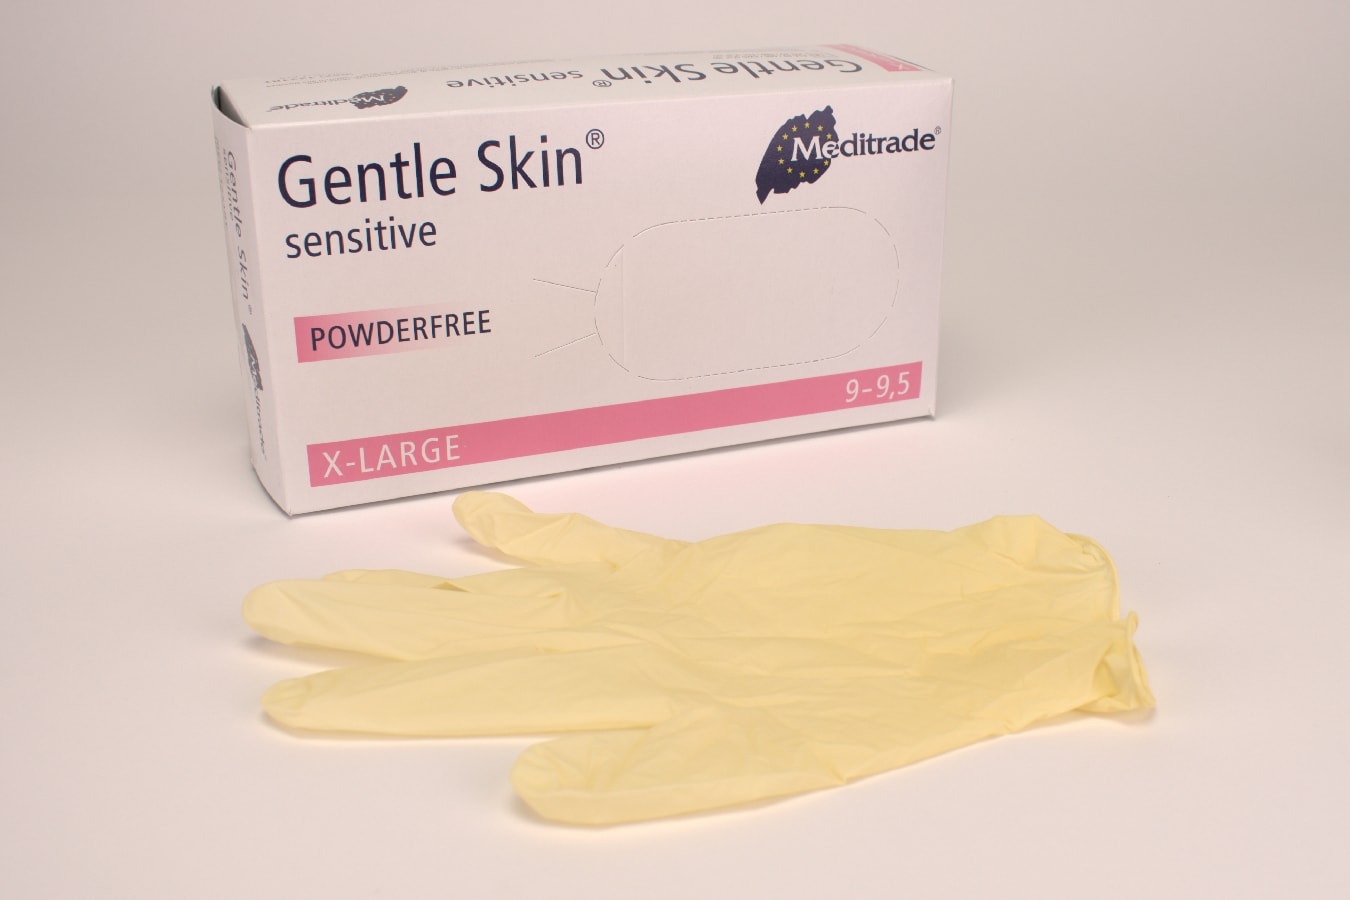 Handske Latex Gentle Skin Sensitive PF XL 100st